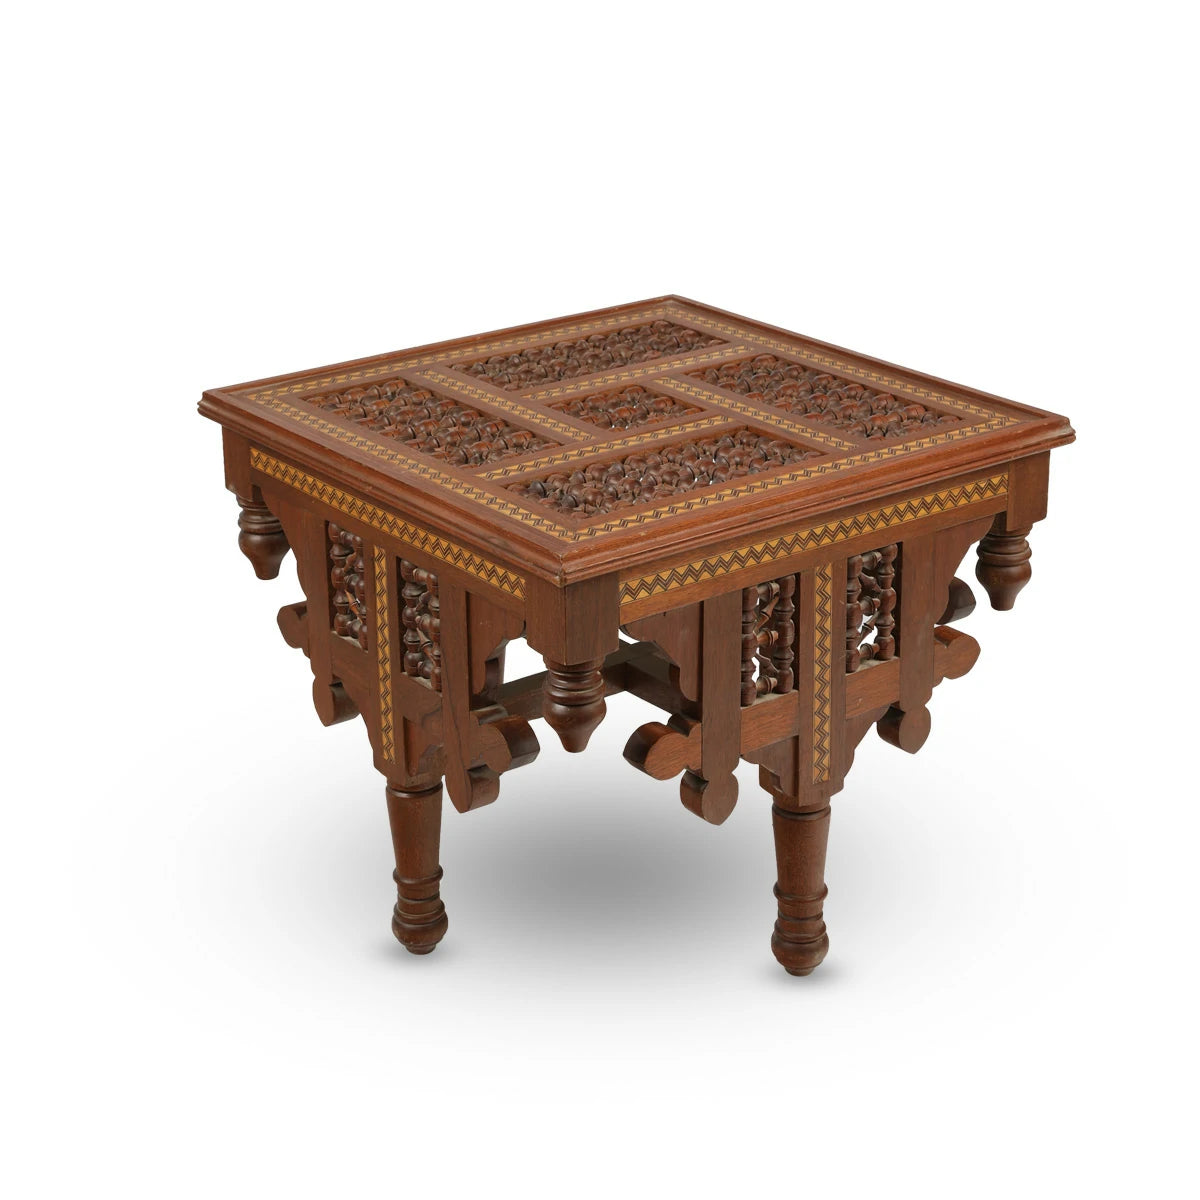 Handmade Arabian Style Coffee Table using Mashrabiya Woodworking